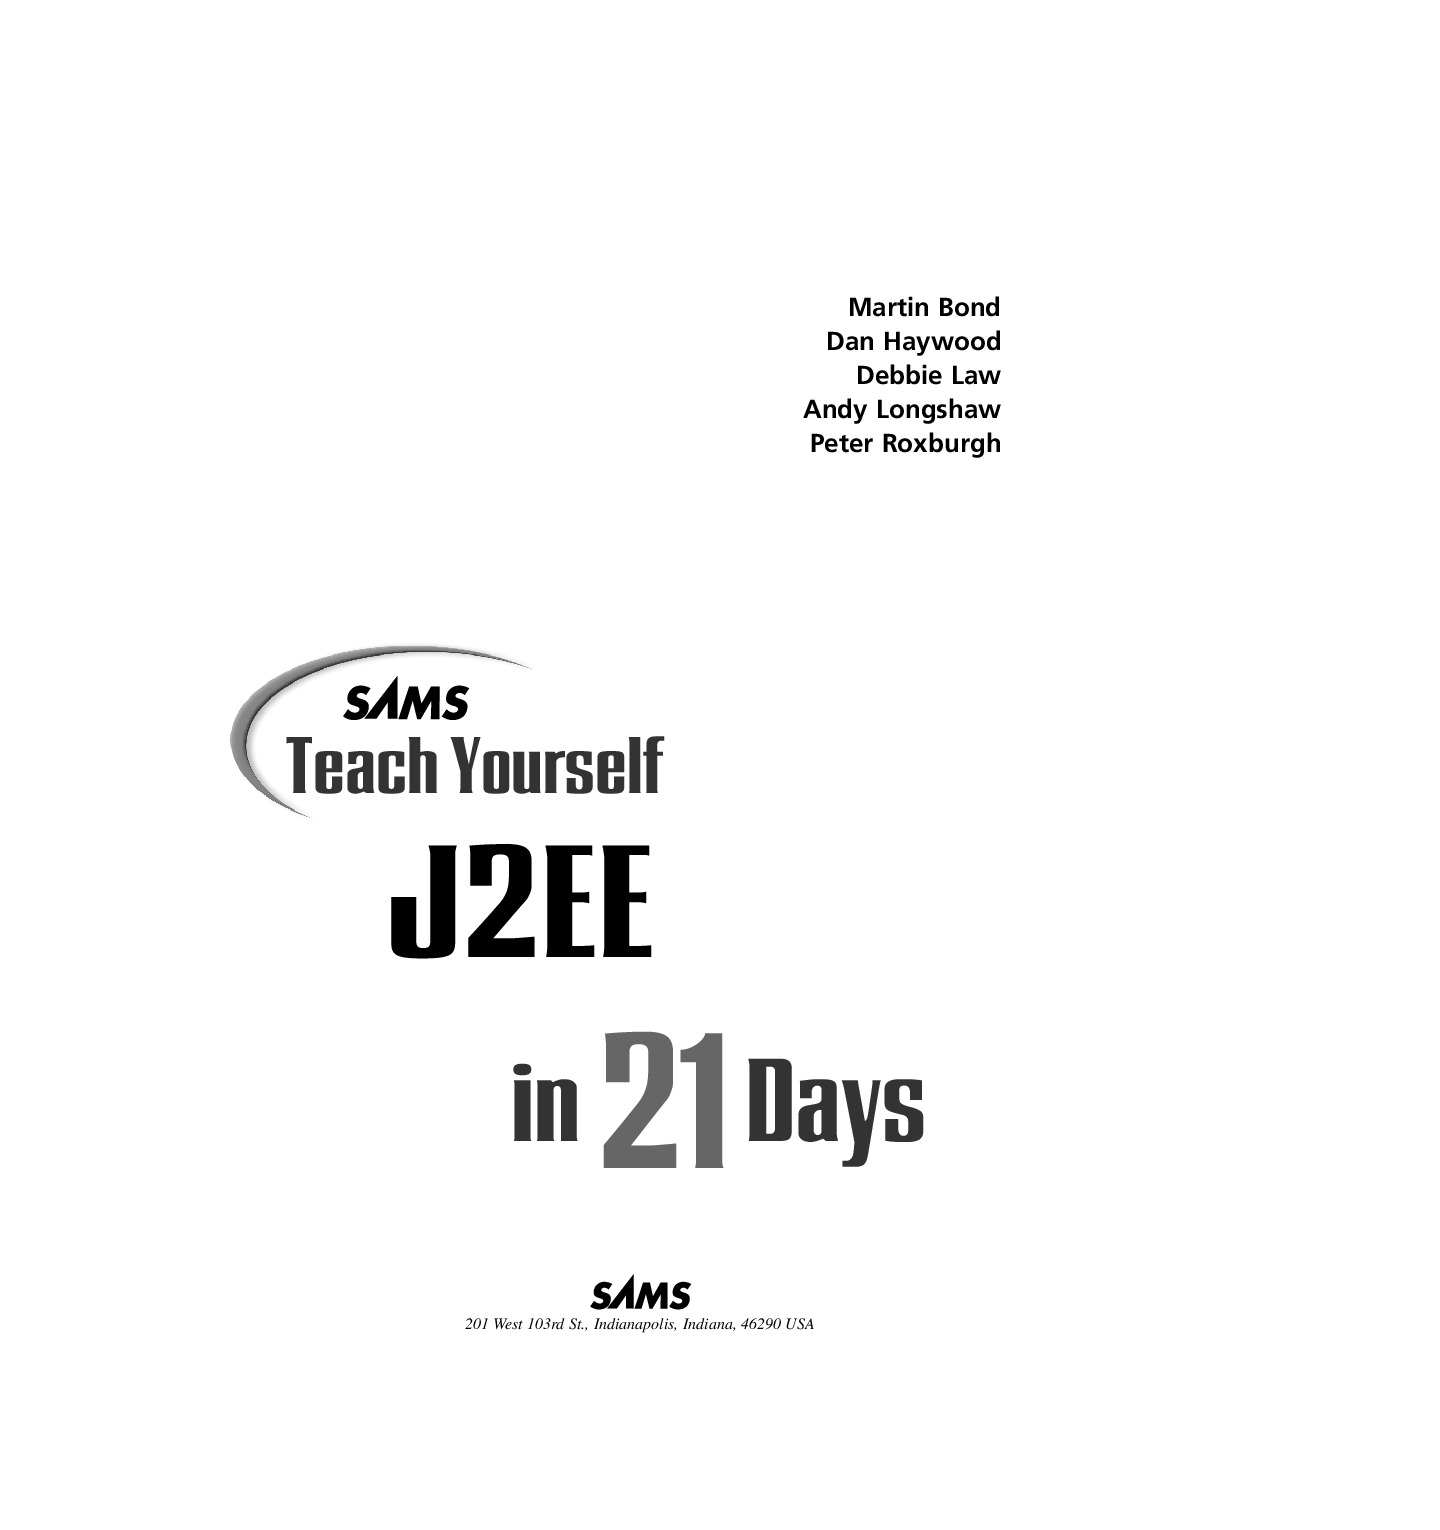 Java – J2EE – Teach Yourself J2EE in 21 Days – Sams